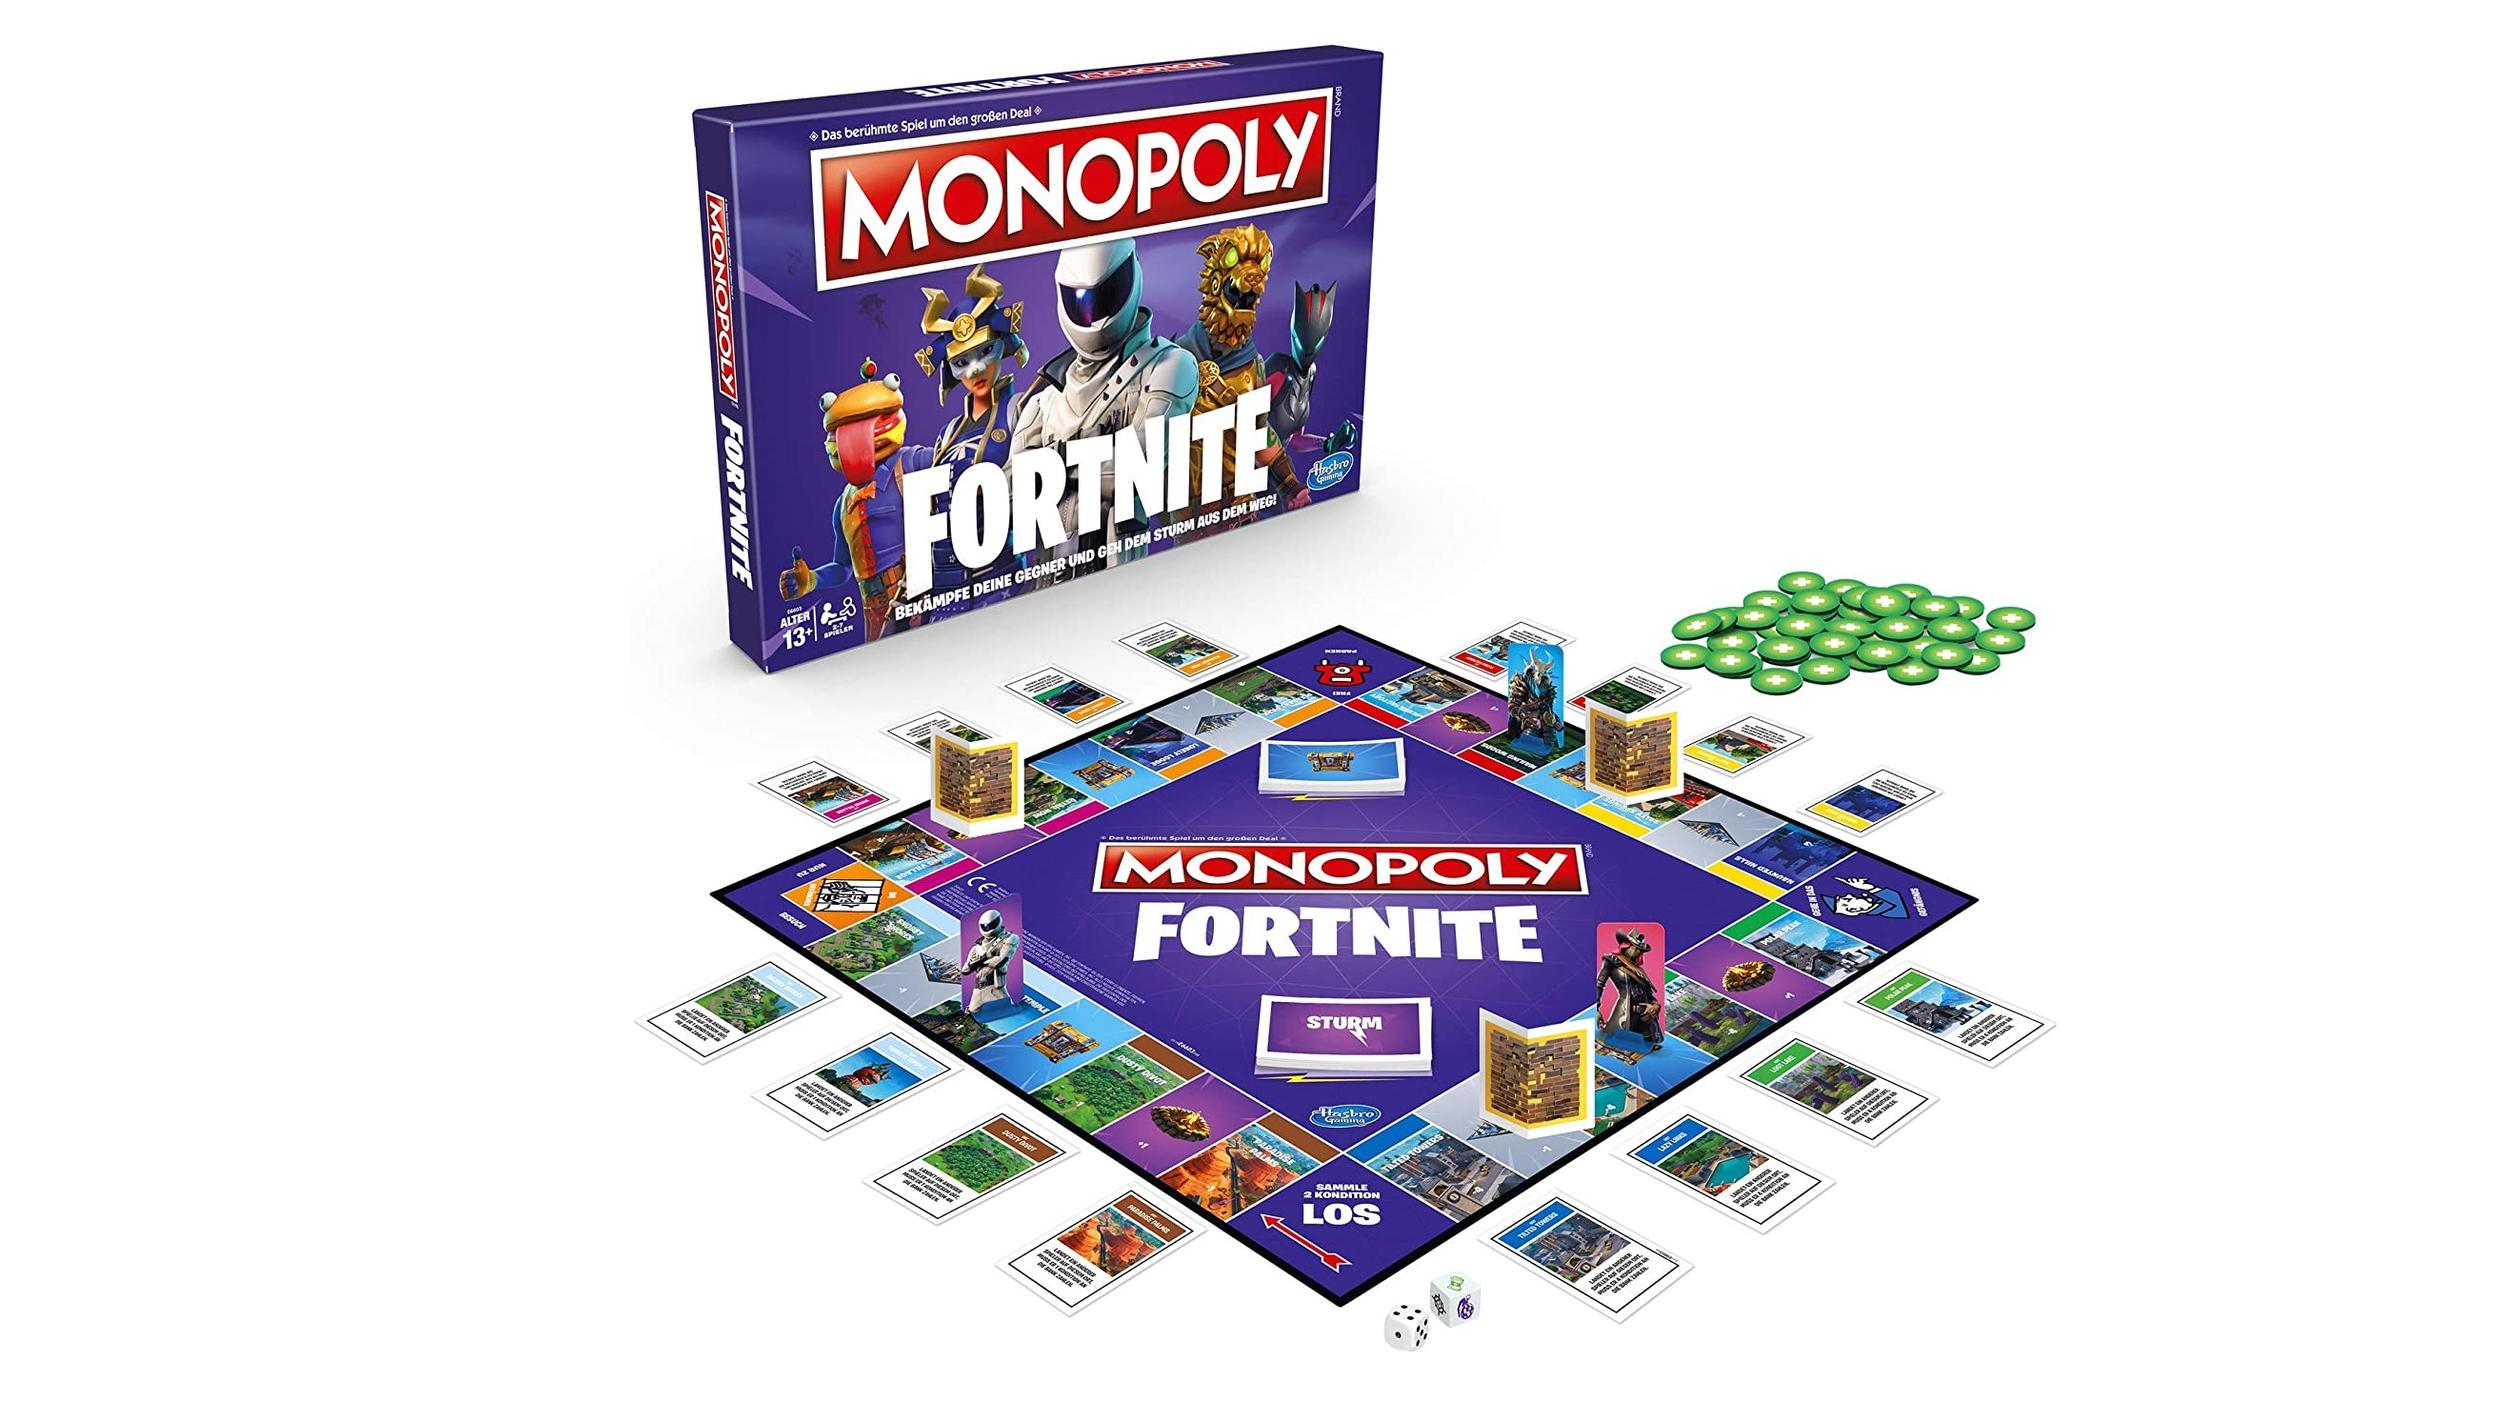 "Fortnite Monopoly"